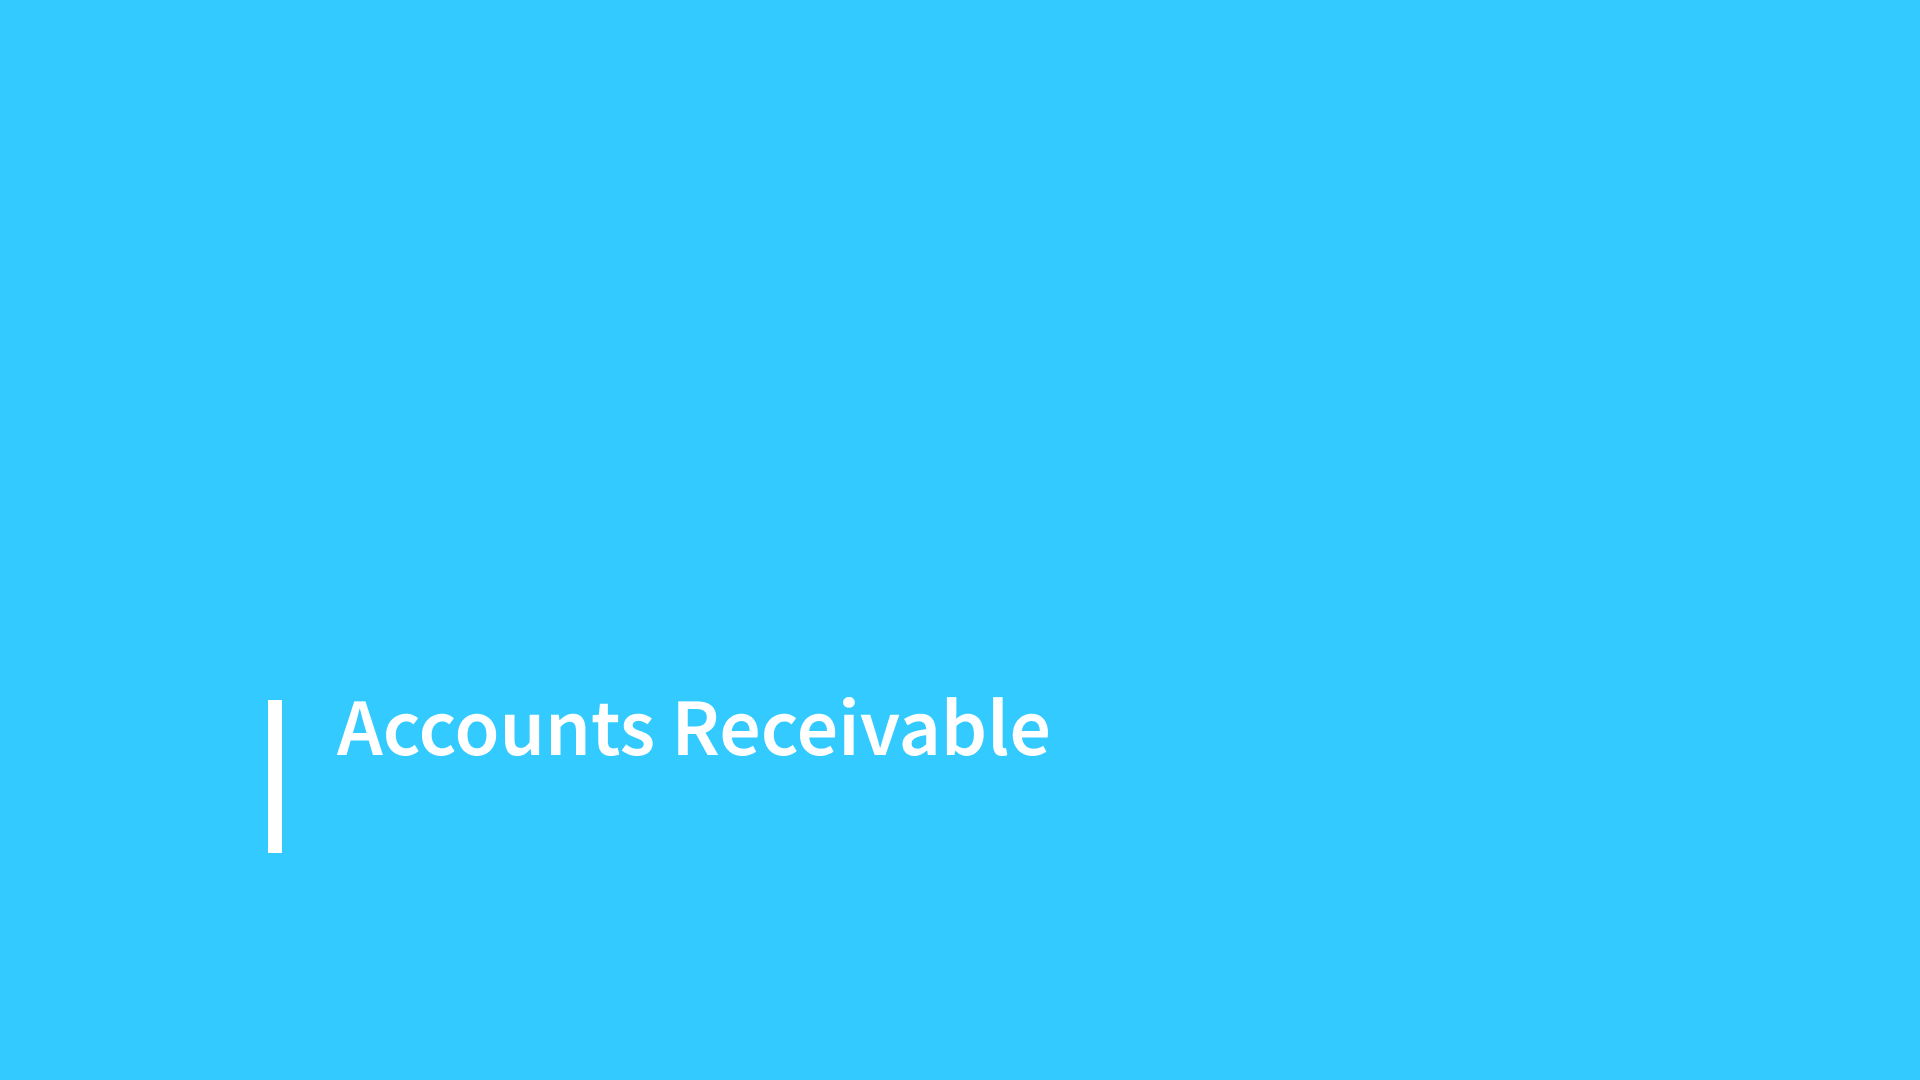 Accounts Receivable Overview